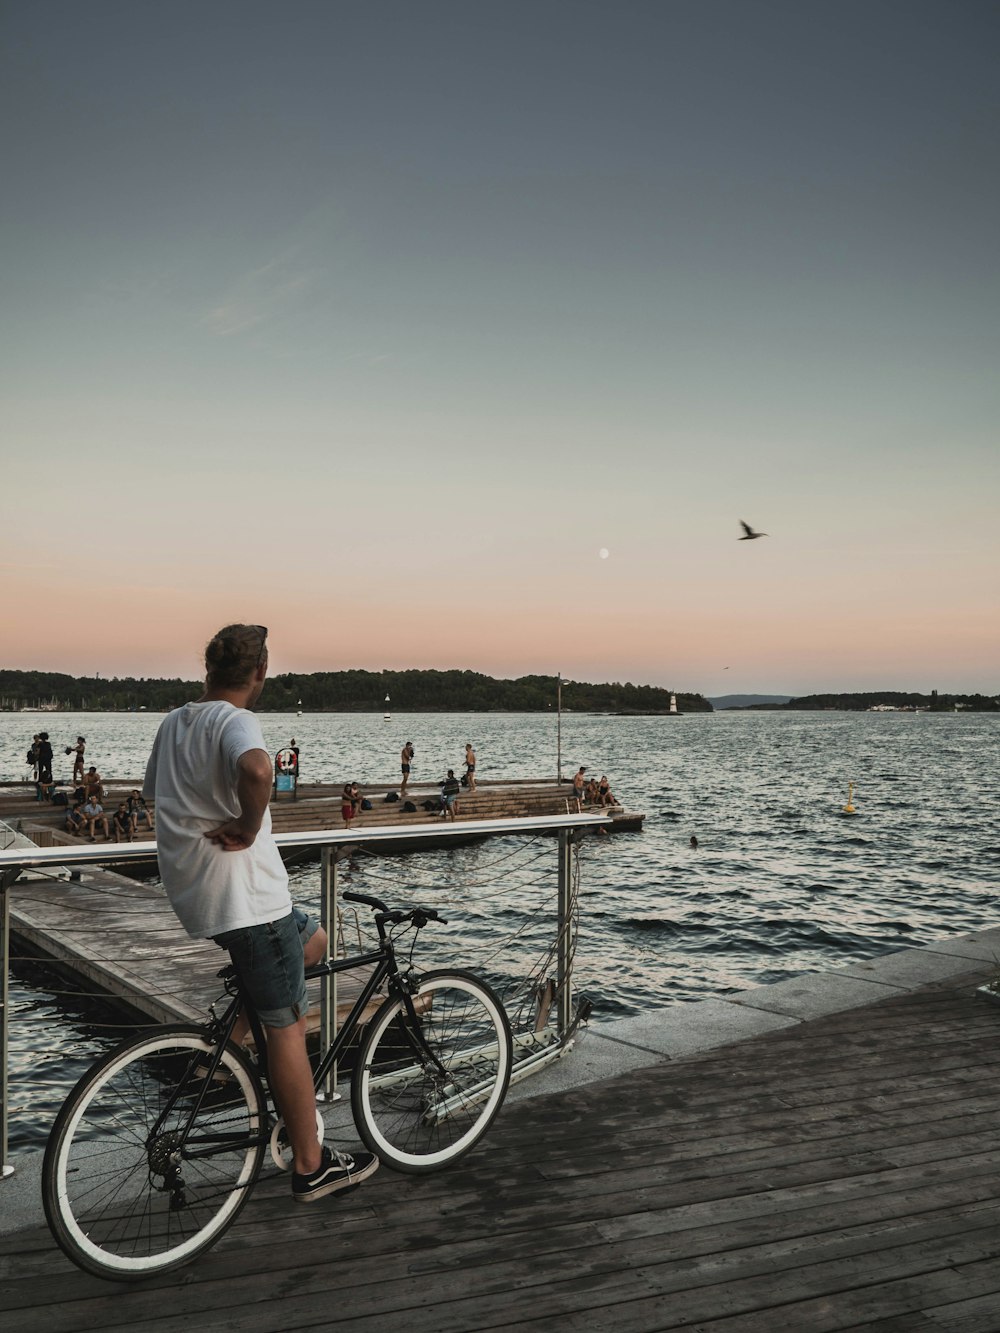 man riding bicycle while watching people on dock during daytime